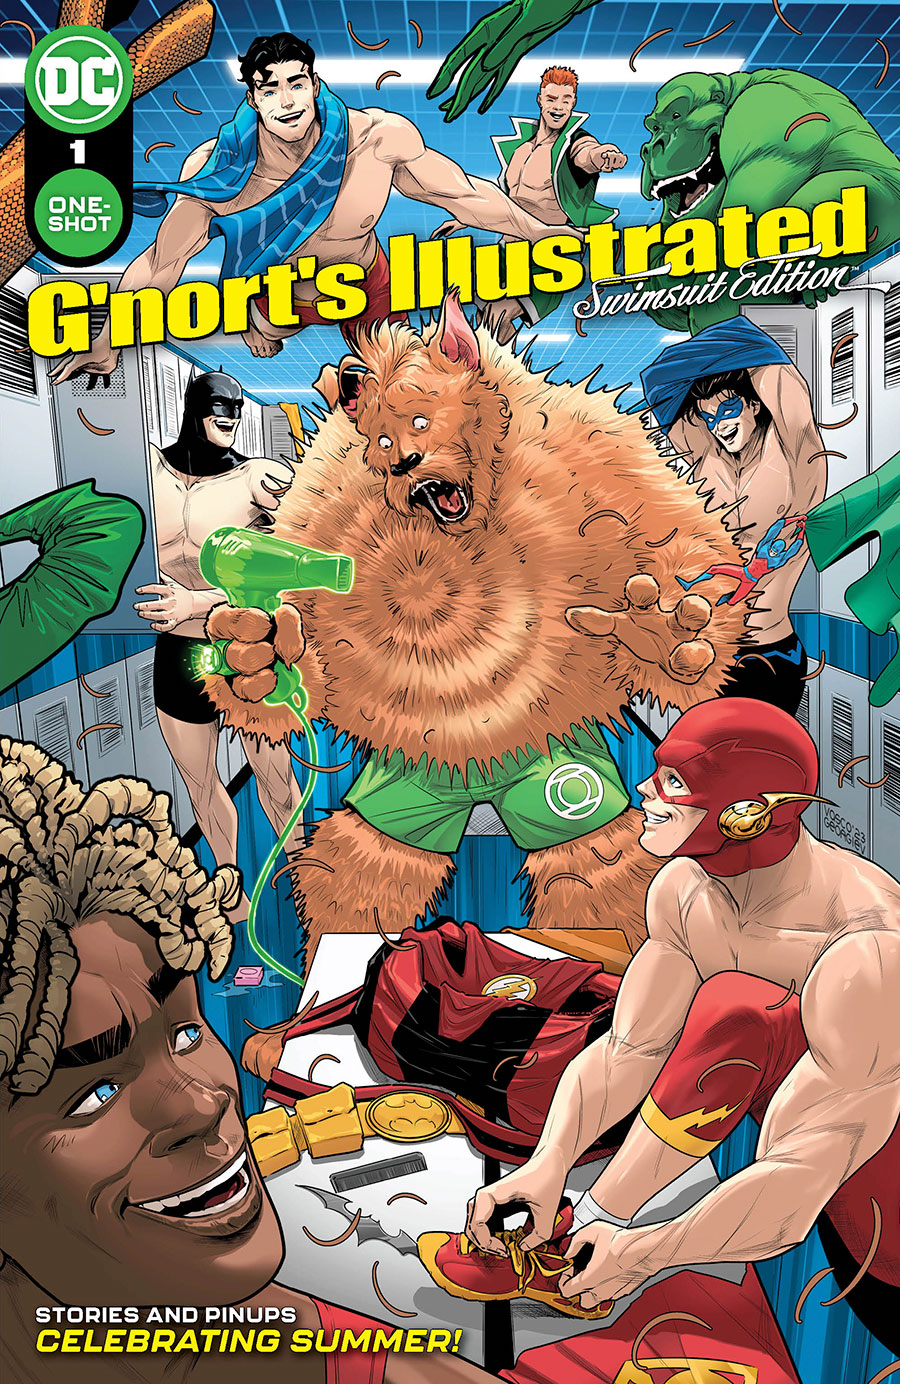 Gnorts Illustrated Swimsuit Edition #1 (One Shot) Cover A Regular Vasco Georgiev Cover